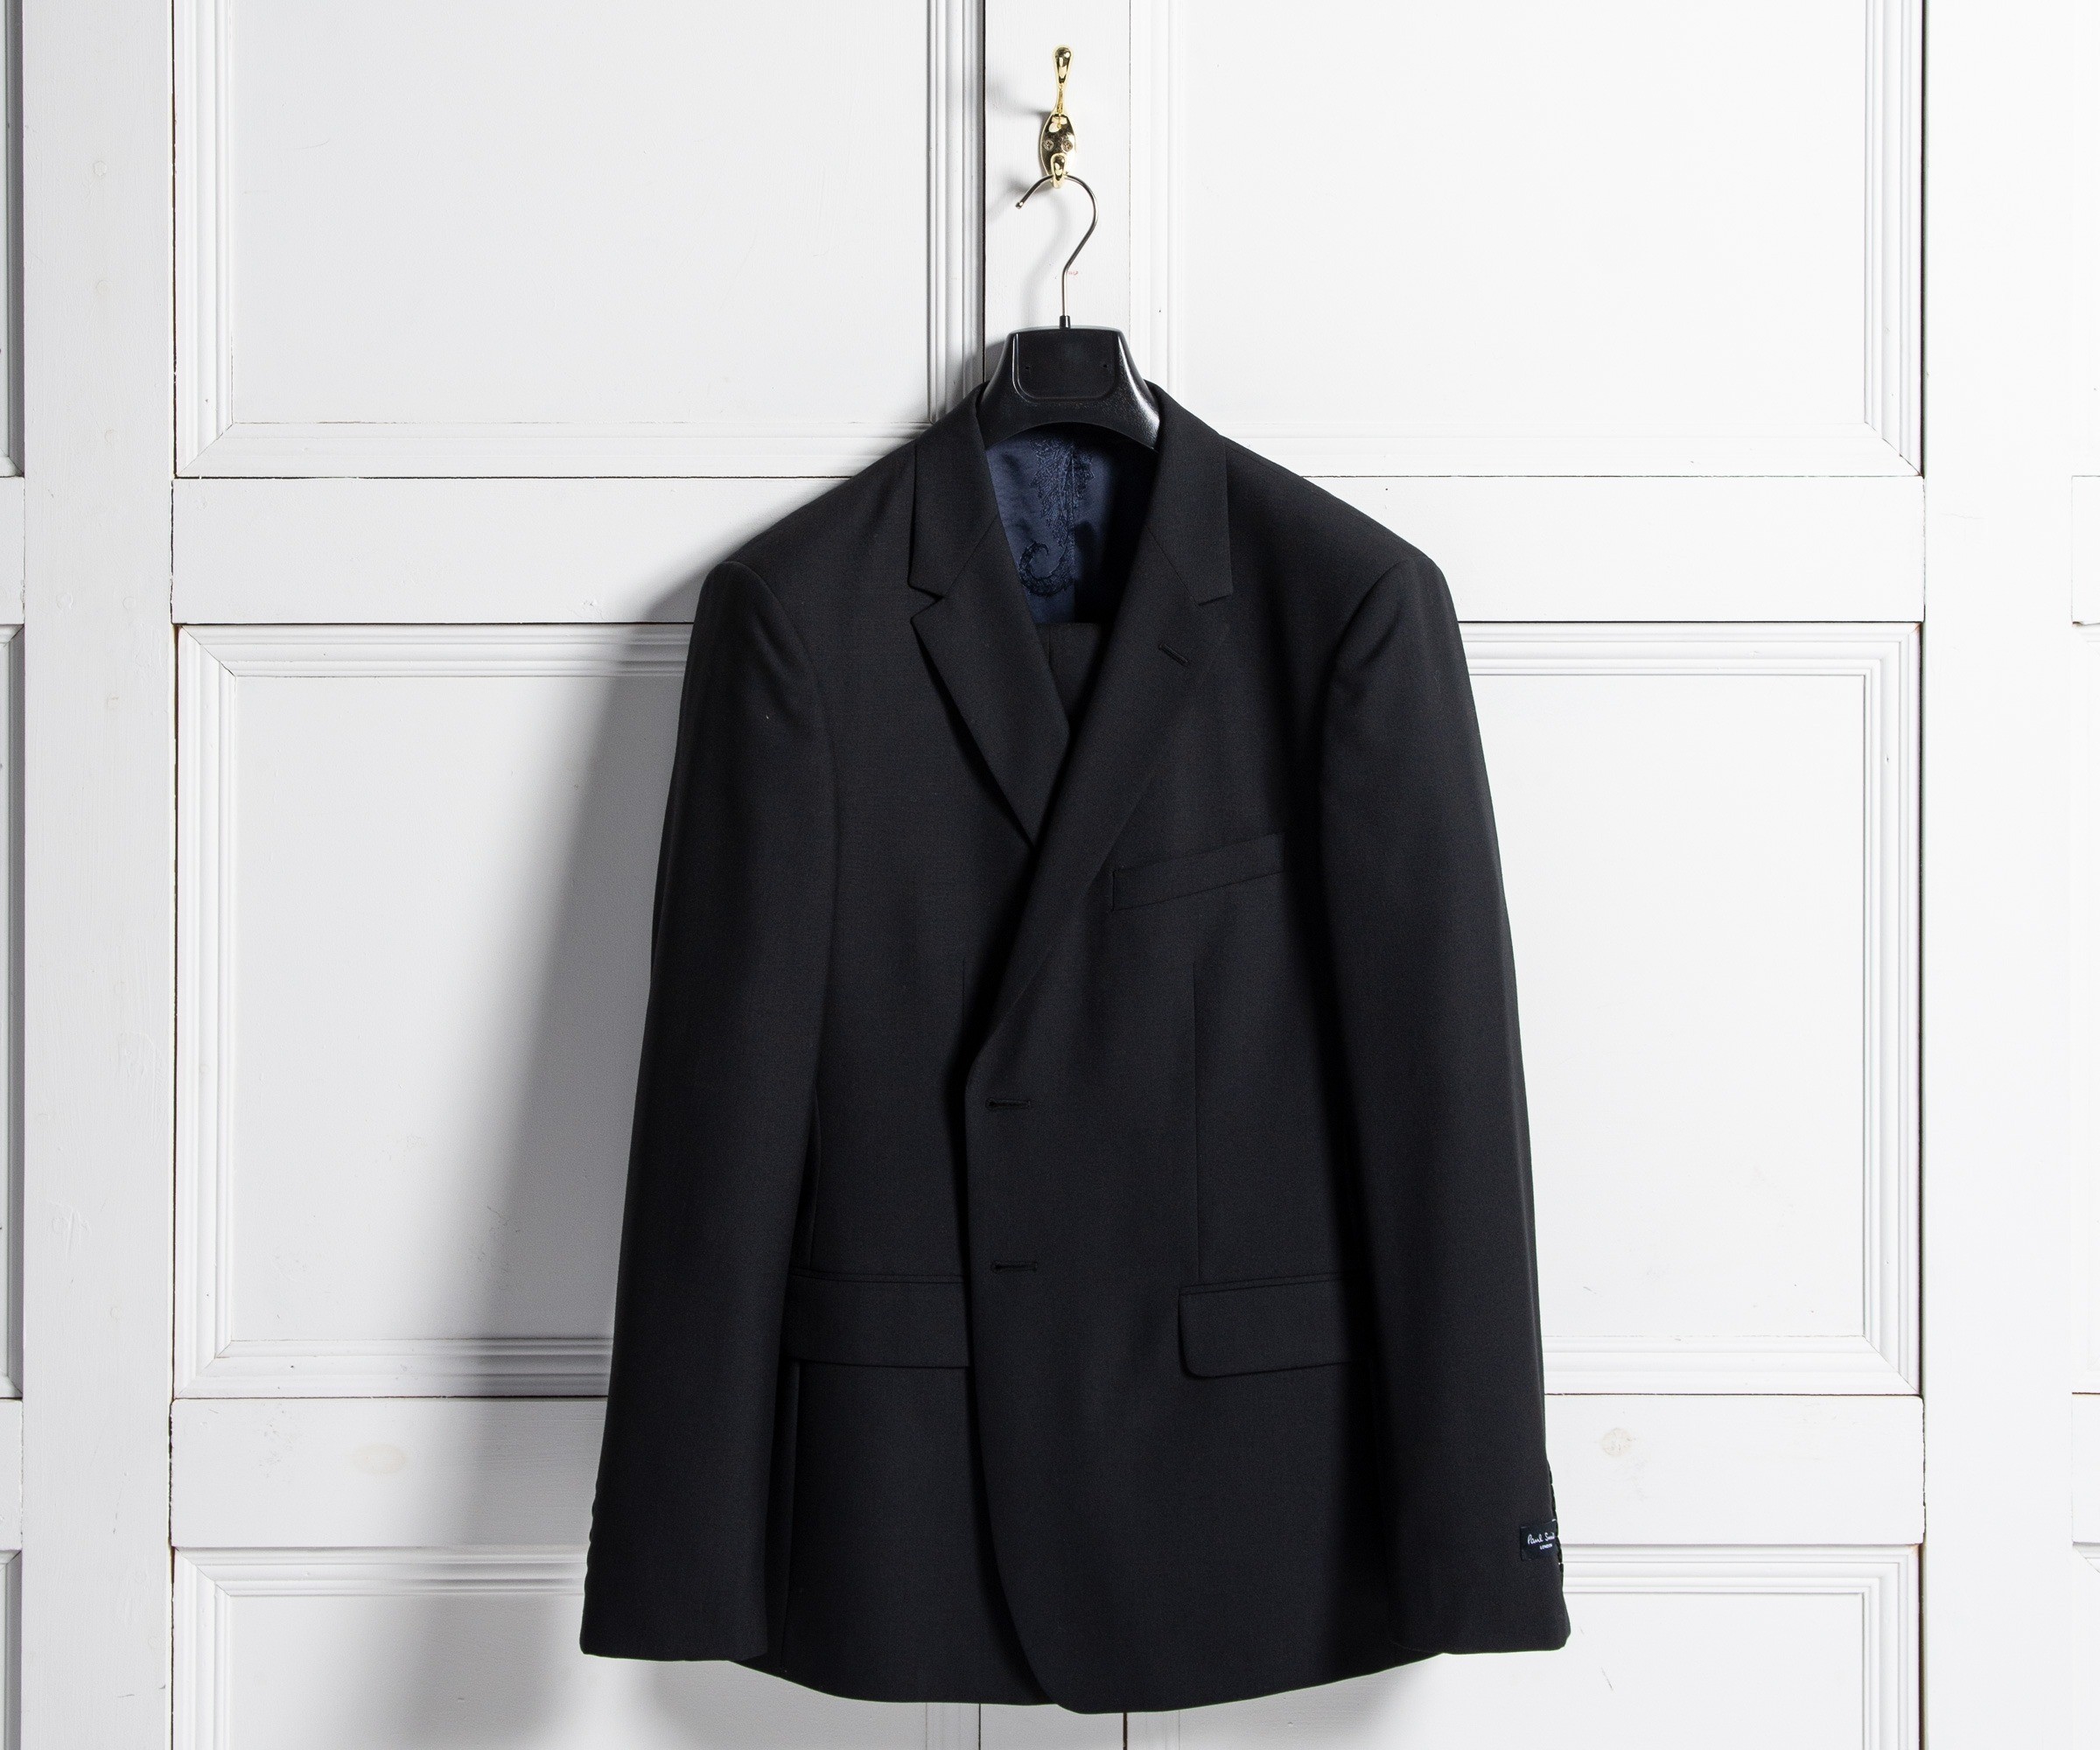 Paul Smith London 'Willoughby' Plain Suit Black